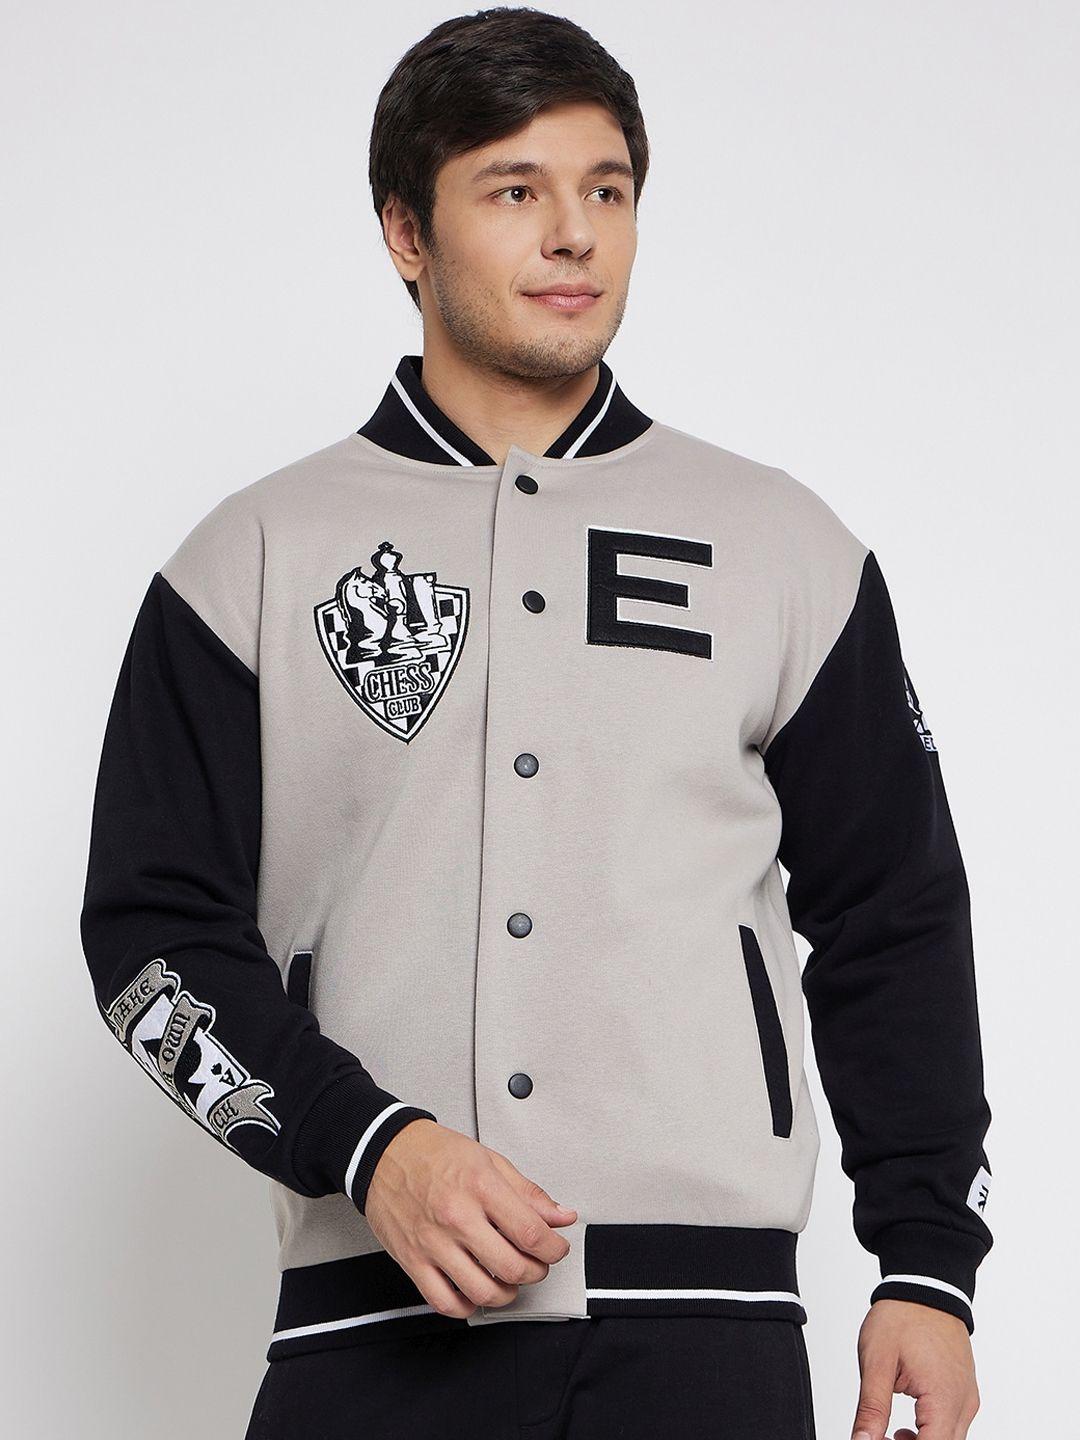 edrio graphic printed cotton varsity jacket